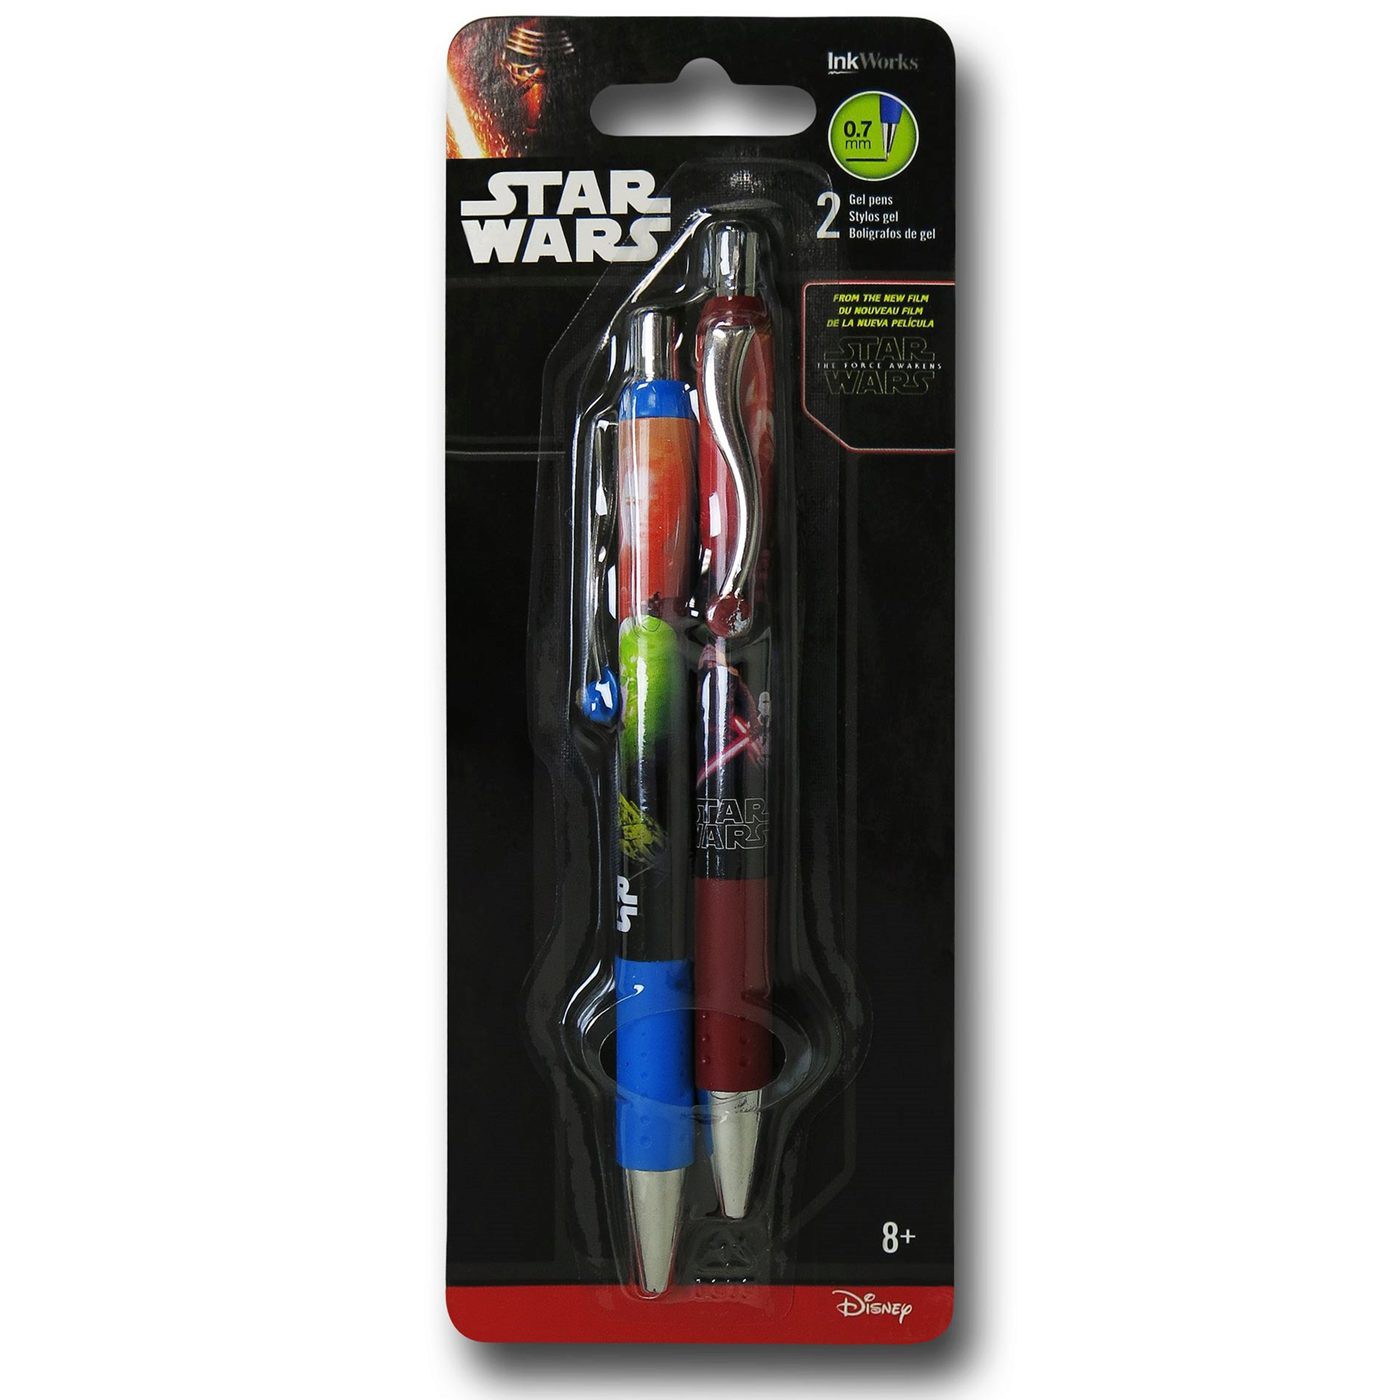 Star Wars Force Awakens Gel Pen 2 Pack